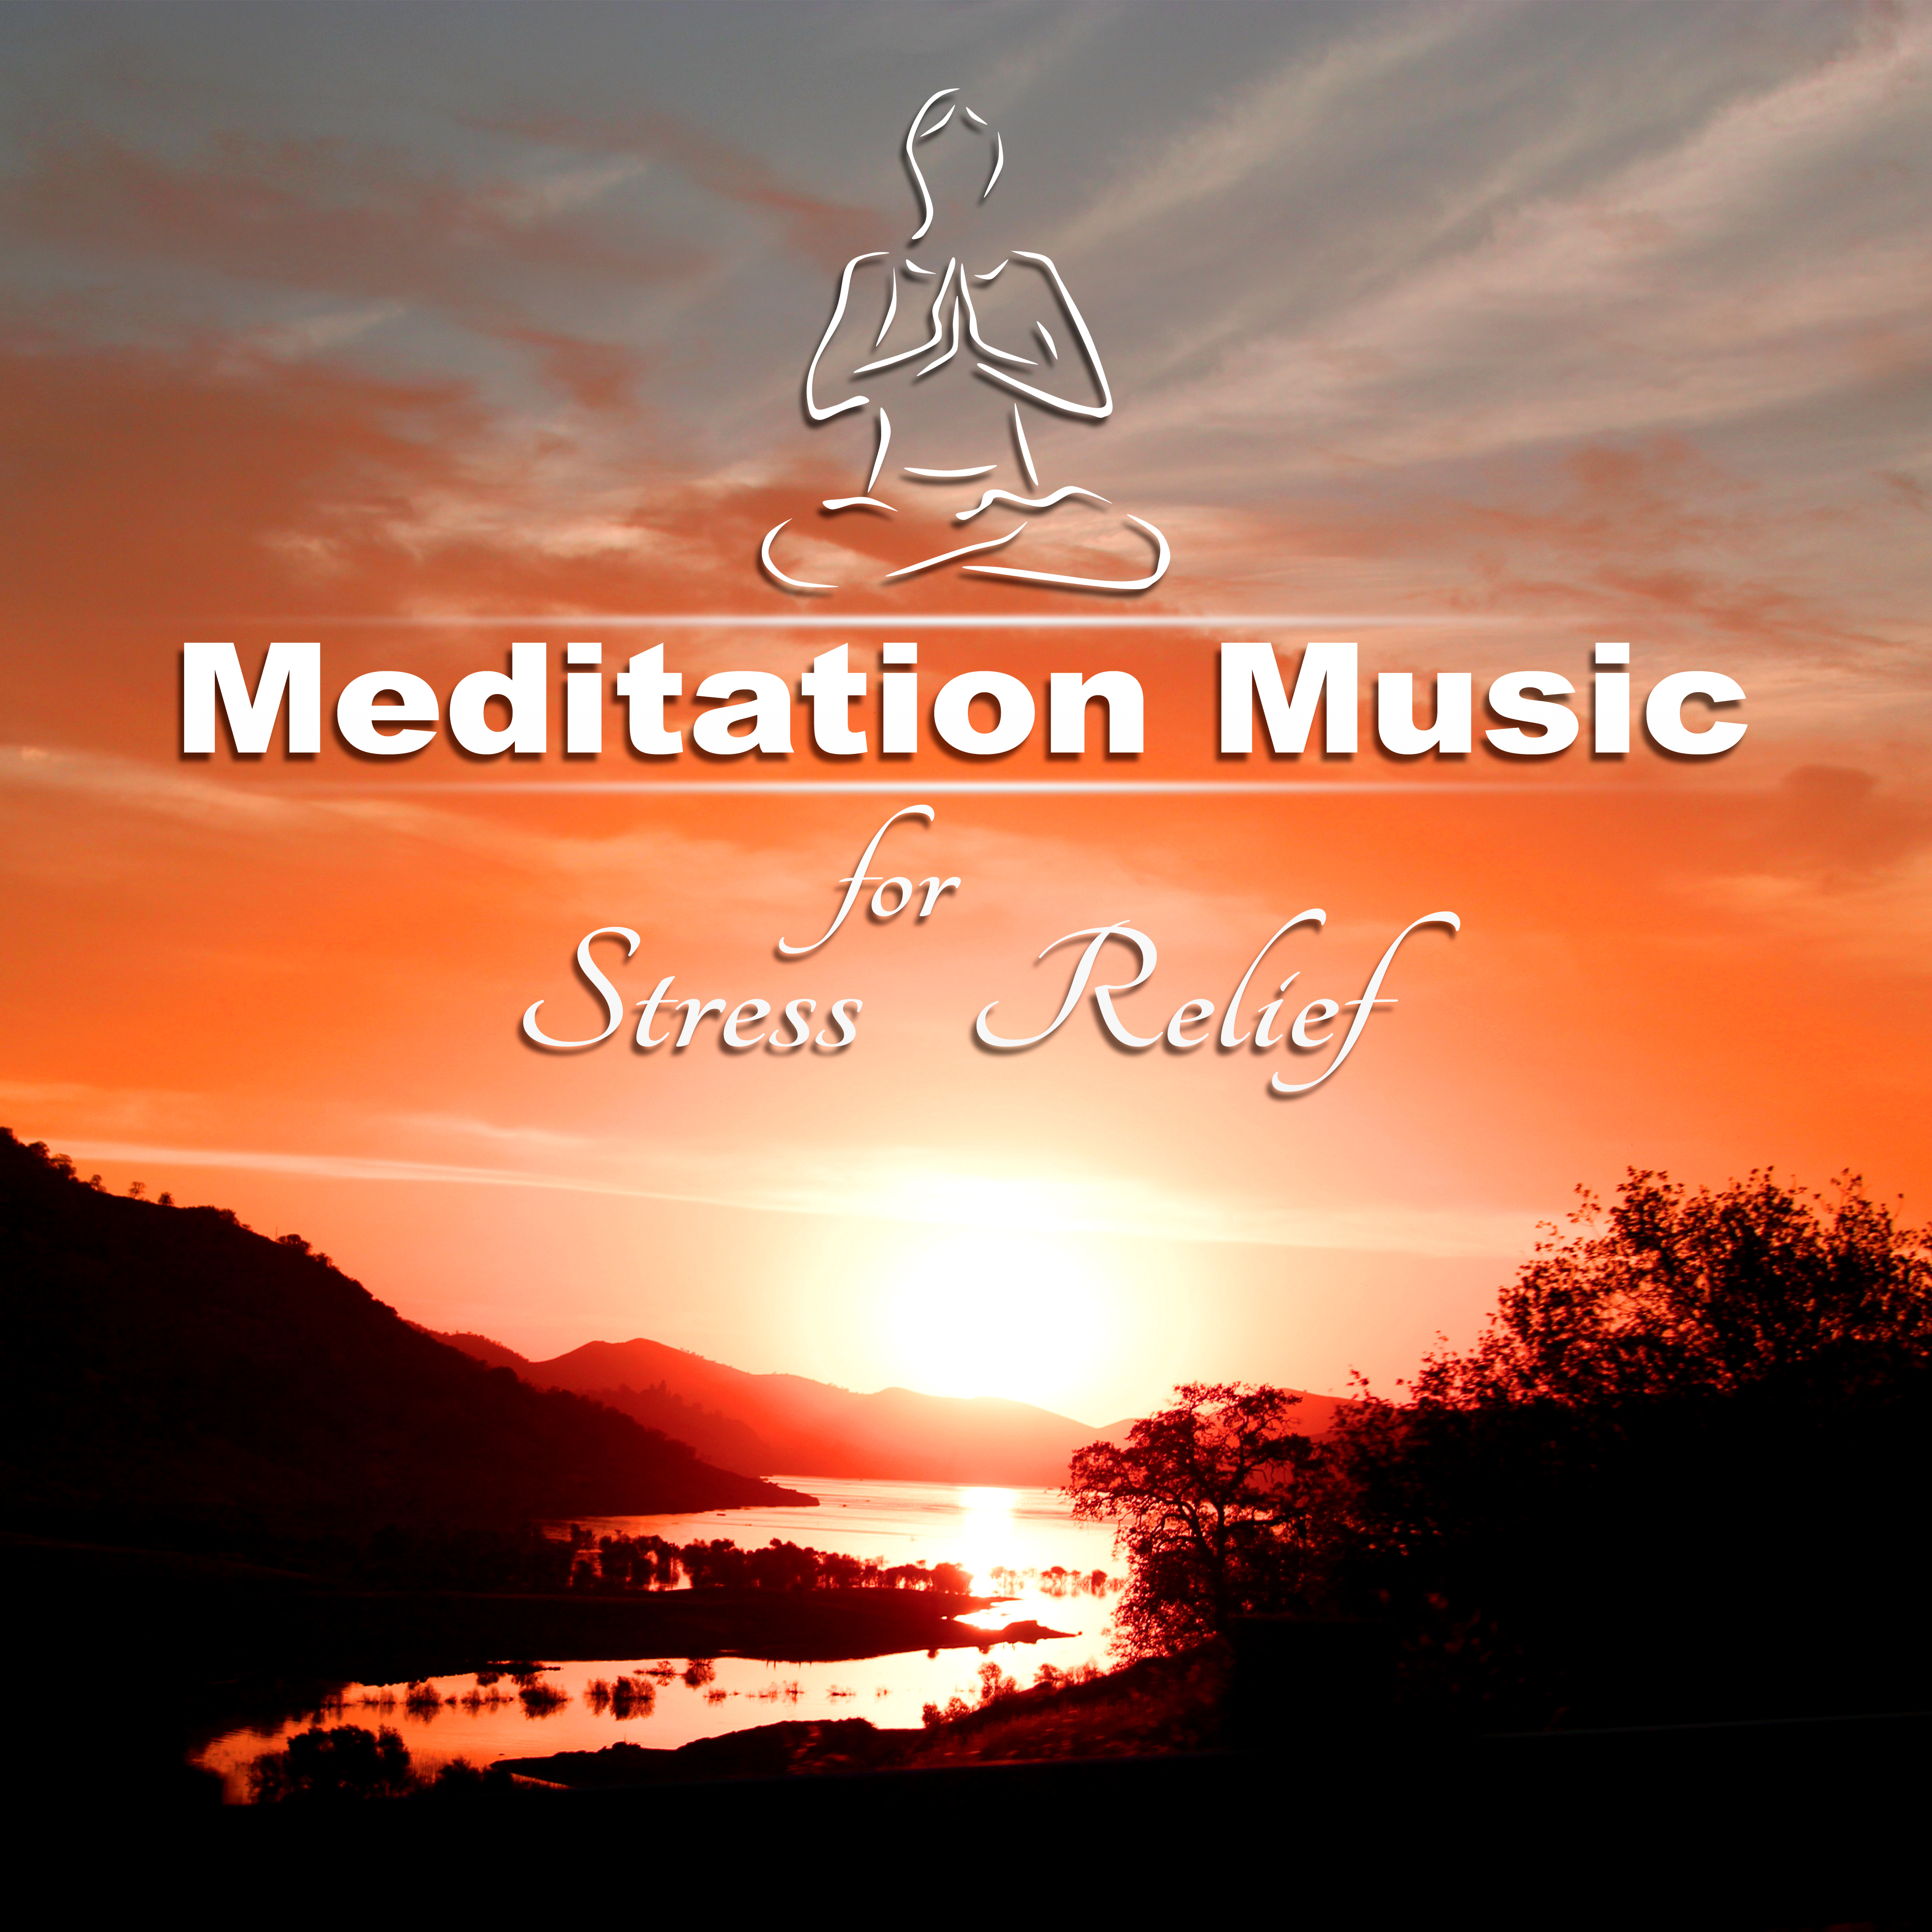 Meditation Music for Stress Relief  Healing Yoga Relaxation, Massage, Sleep Therapy, Spiritual Awakening, Reiki, Tai Chi, Ayurveda, Inner Peace  Love